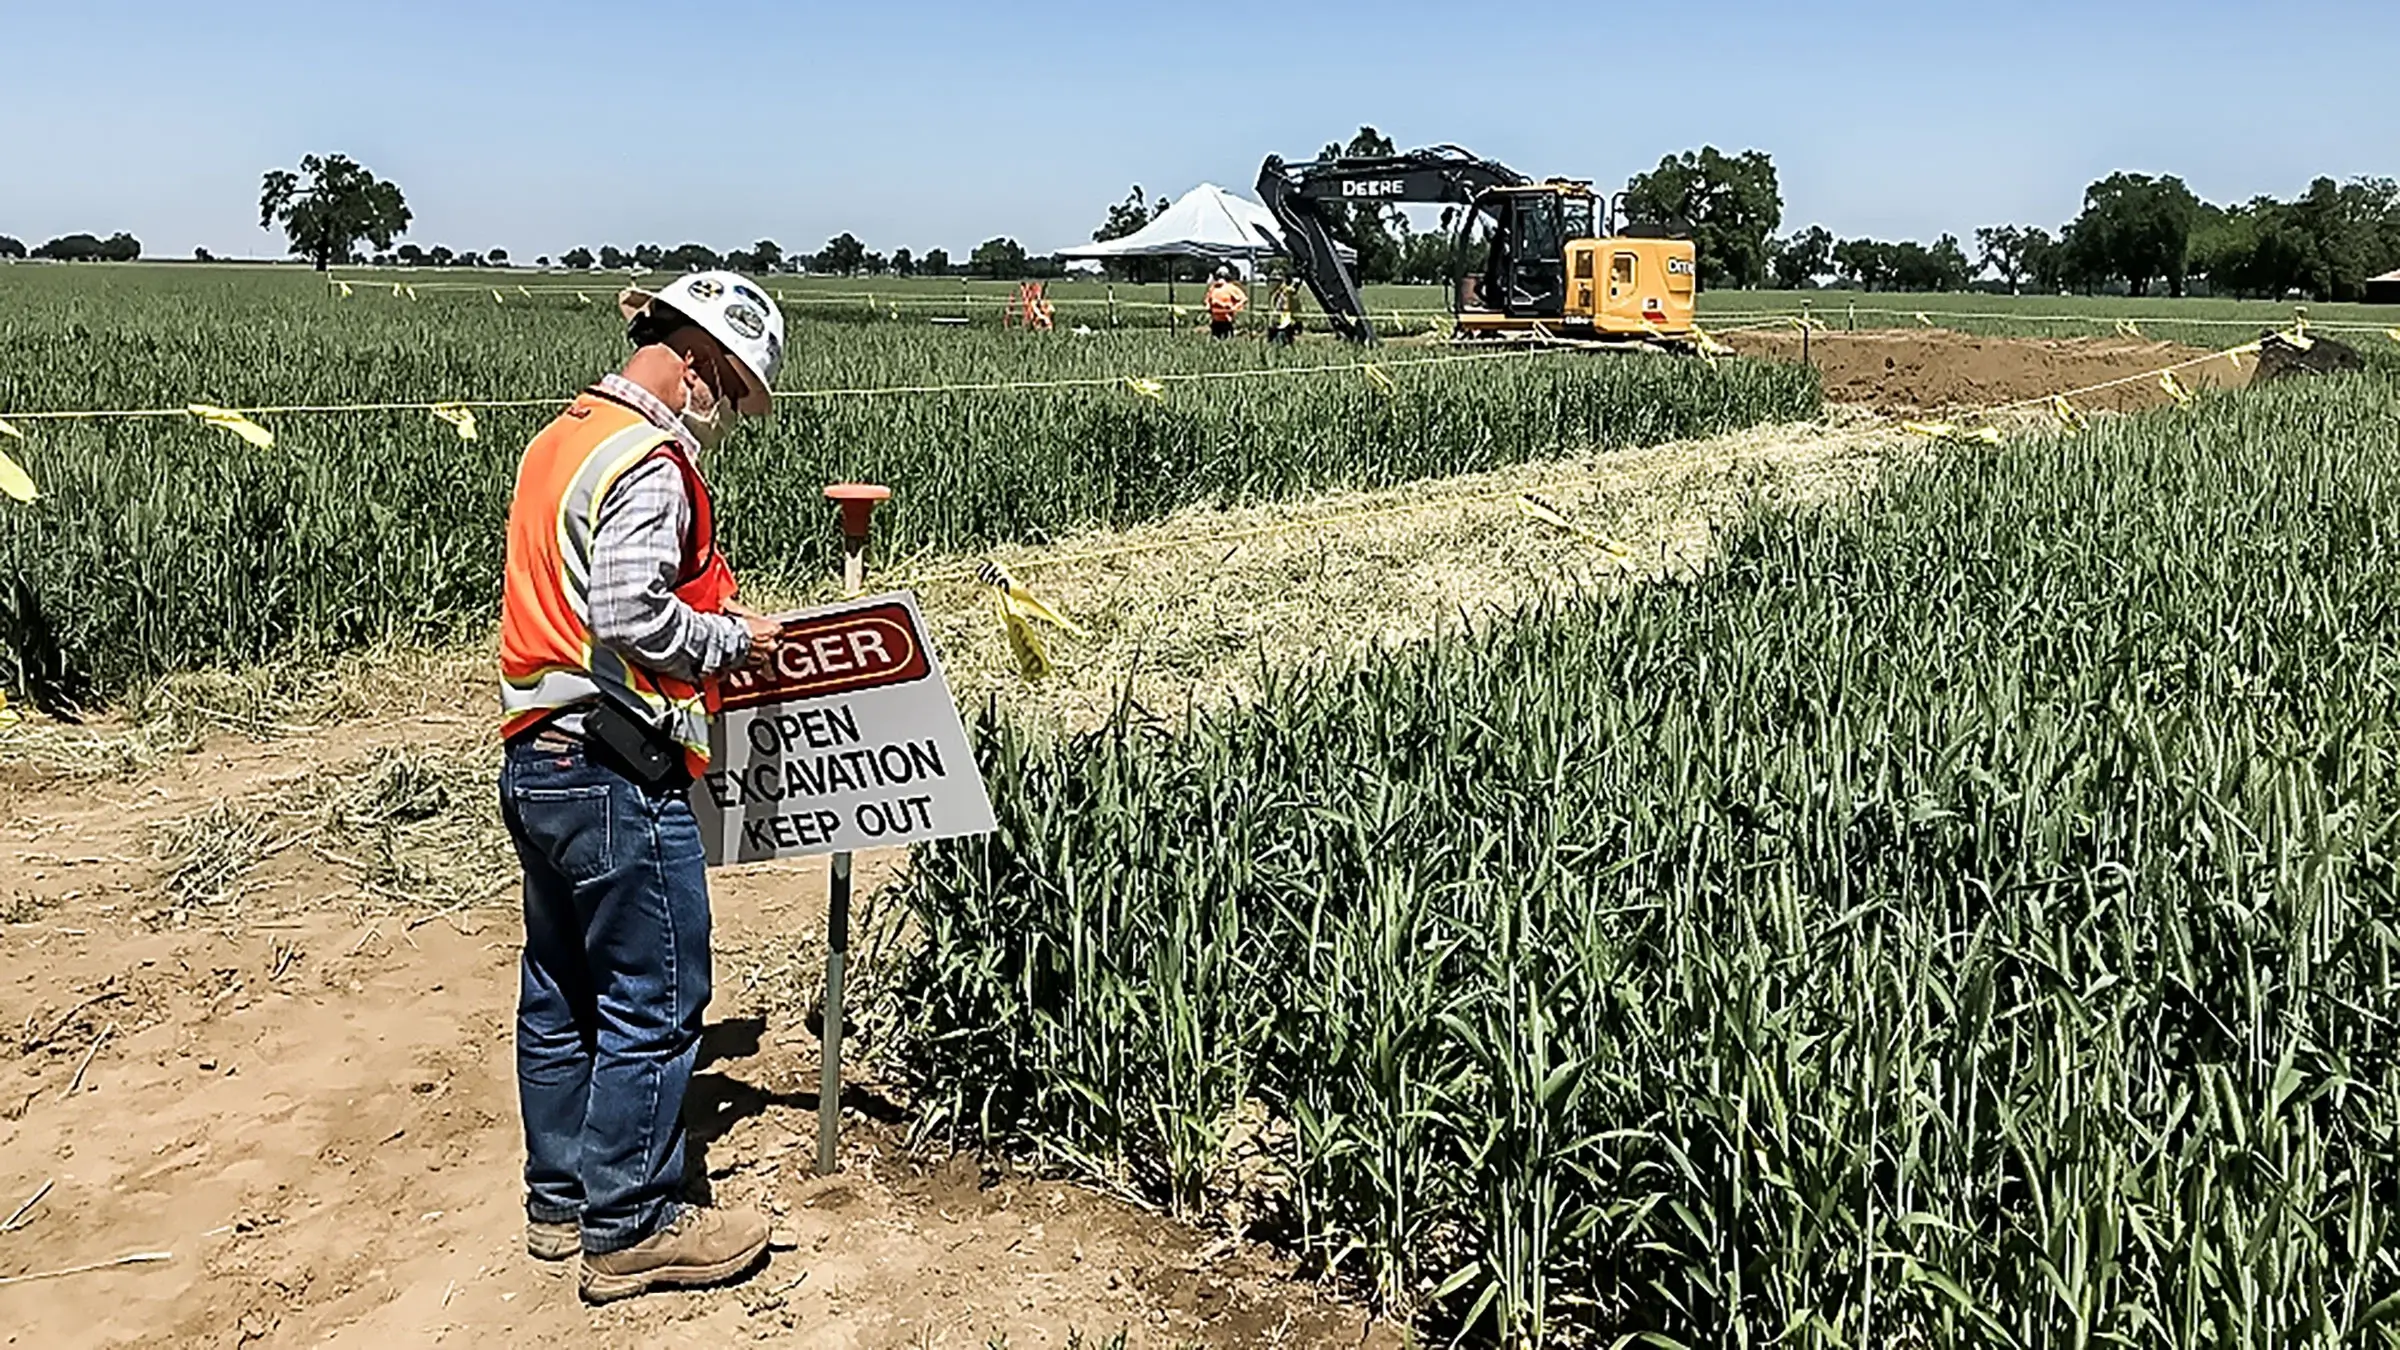 A Michels crew member posts up a Danger sign near a farm land excvation project